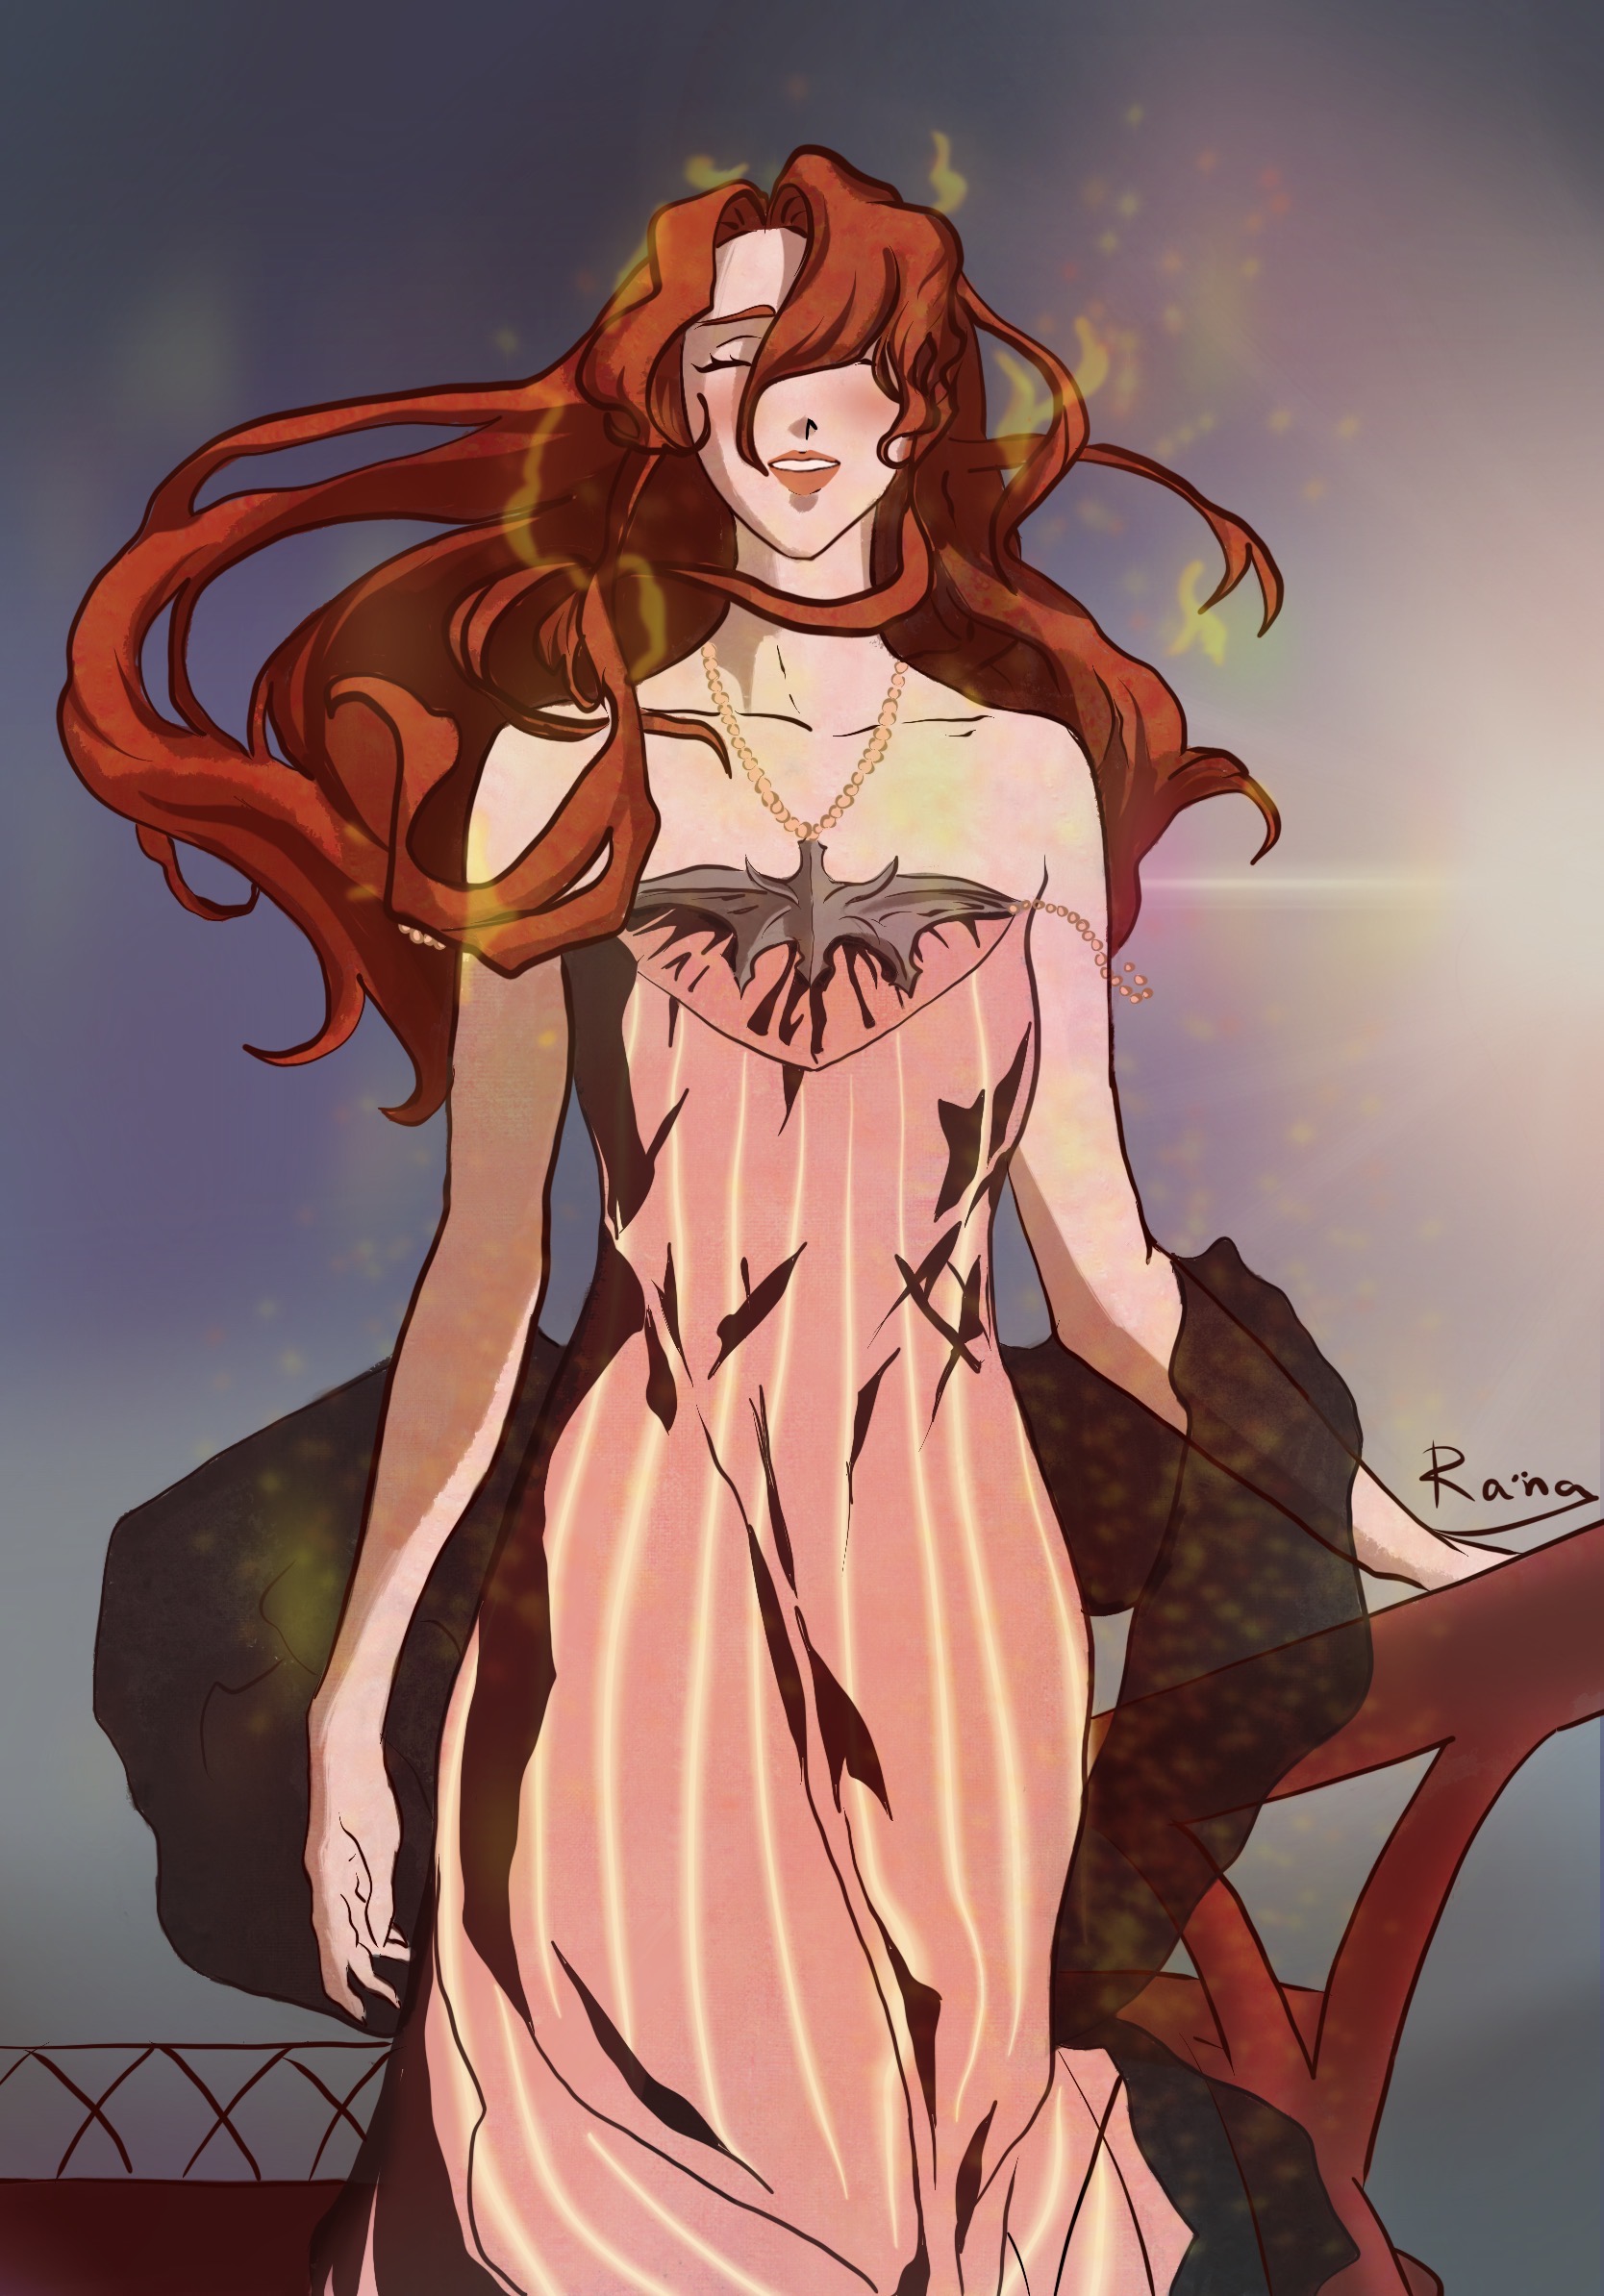 Really liked Lenore's design in the anime, so I drew her! : r/castlevania